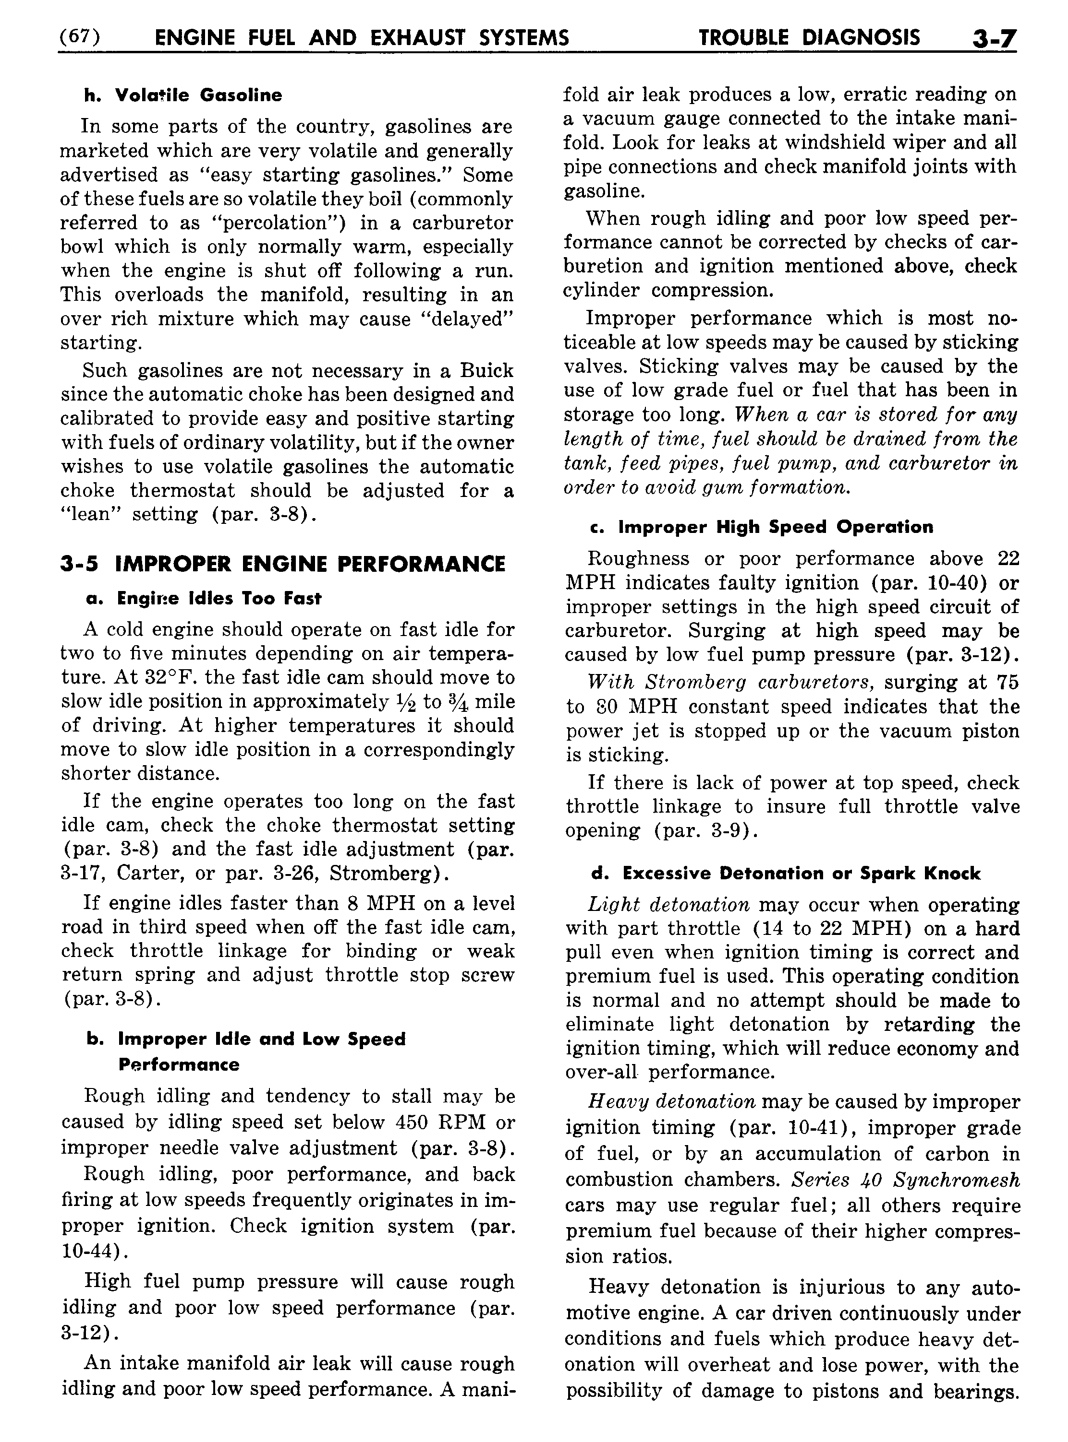 n_04 1955 Buick Shop Manual - Engine Fuel & Exhaust-007-007.jpg